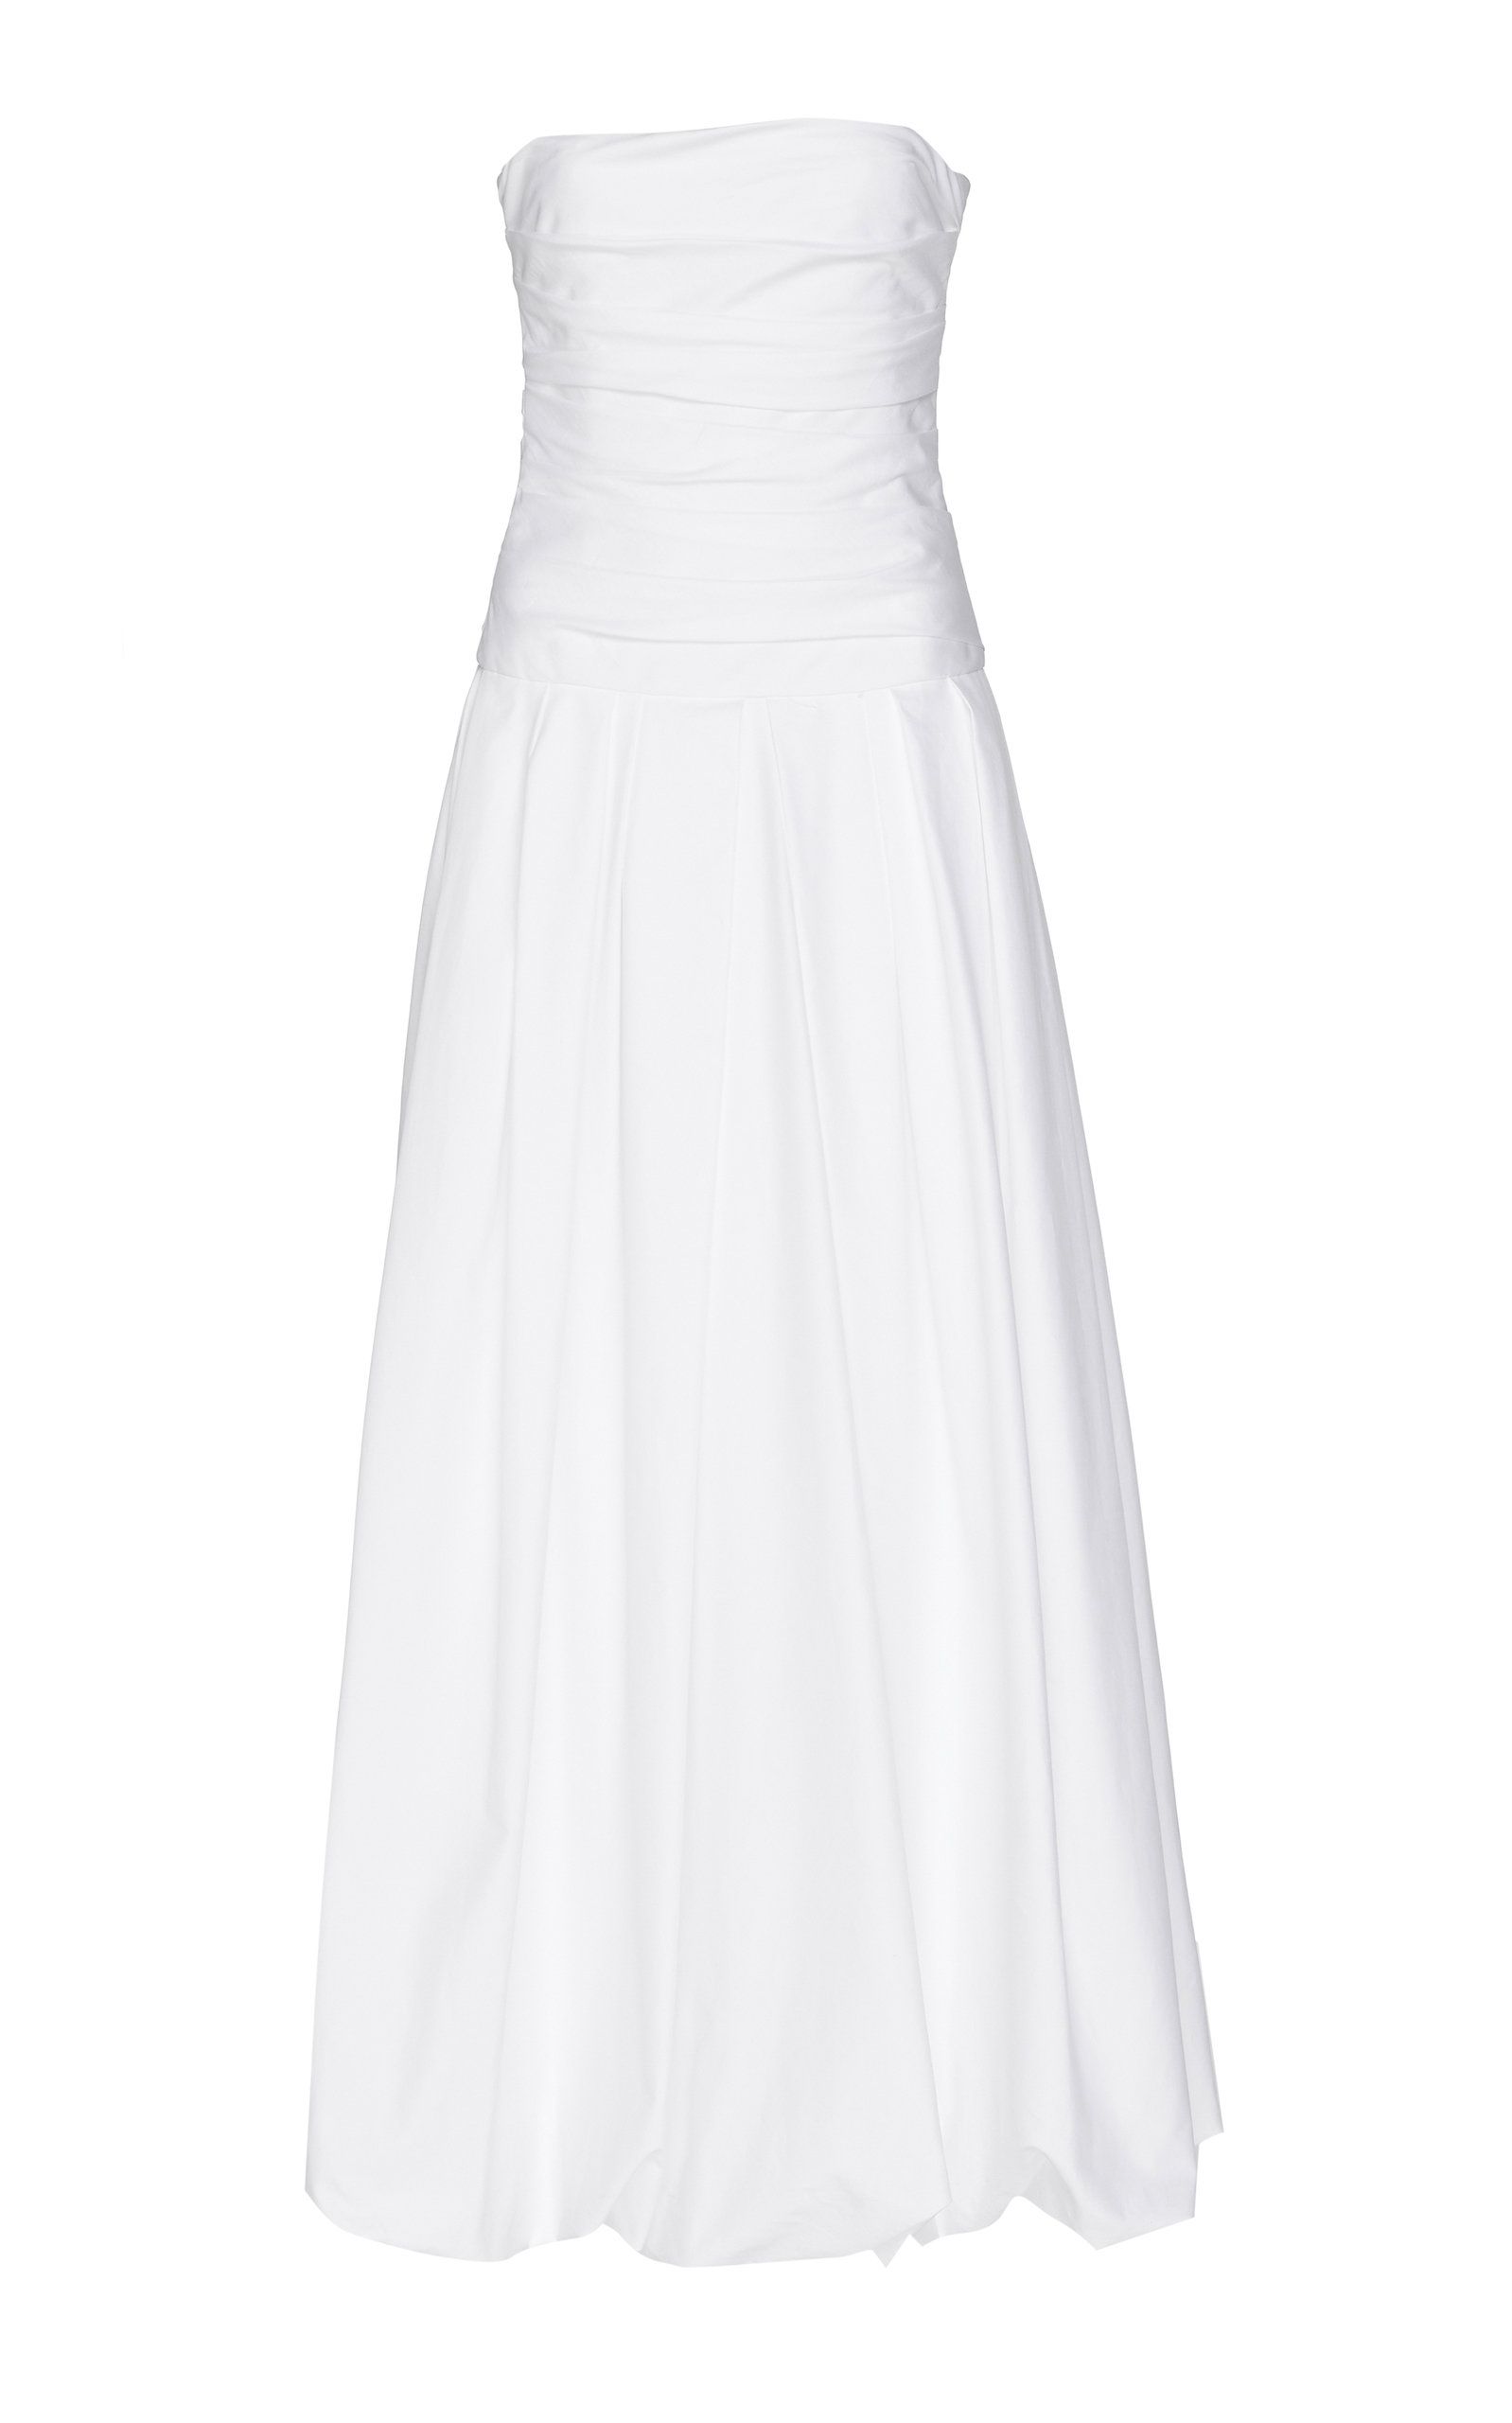 white frock dress for wedding